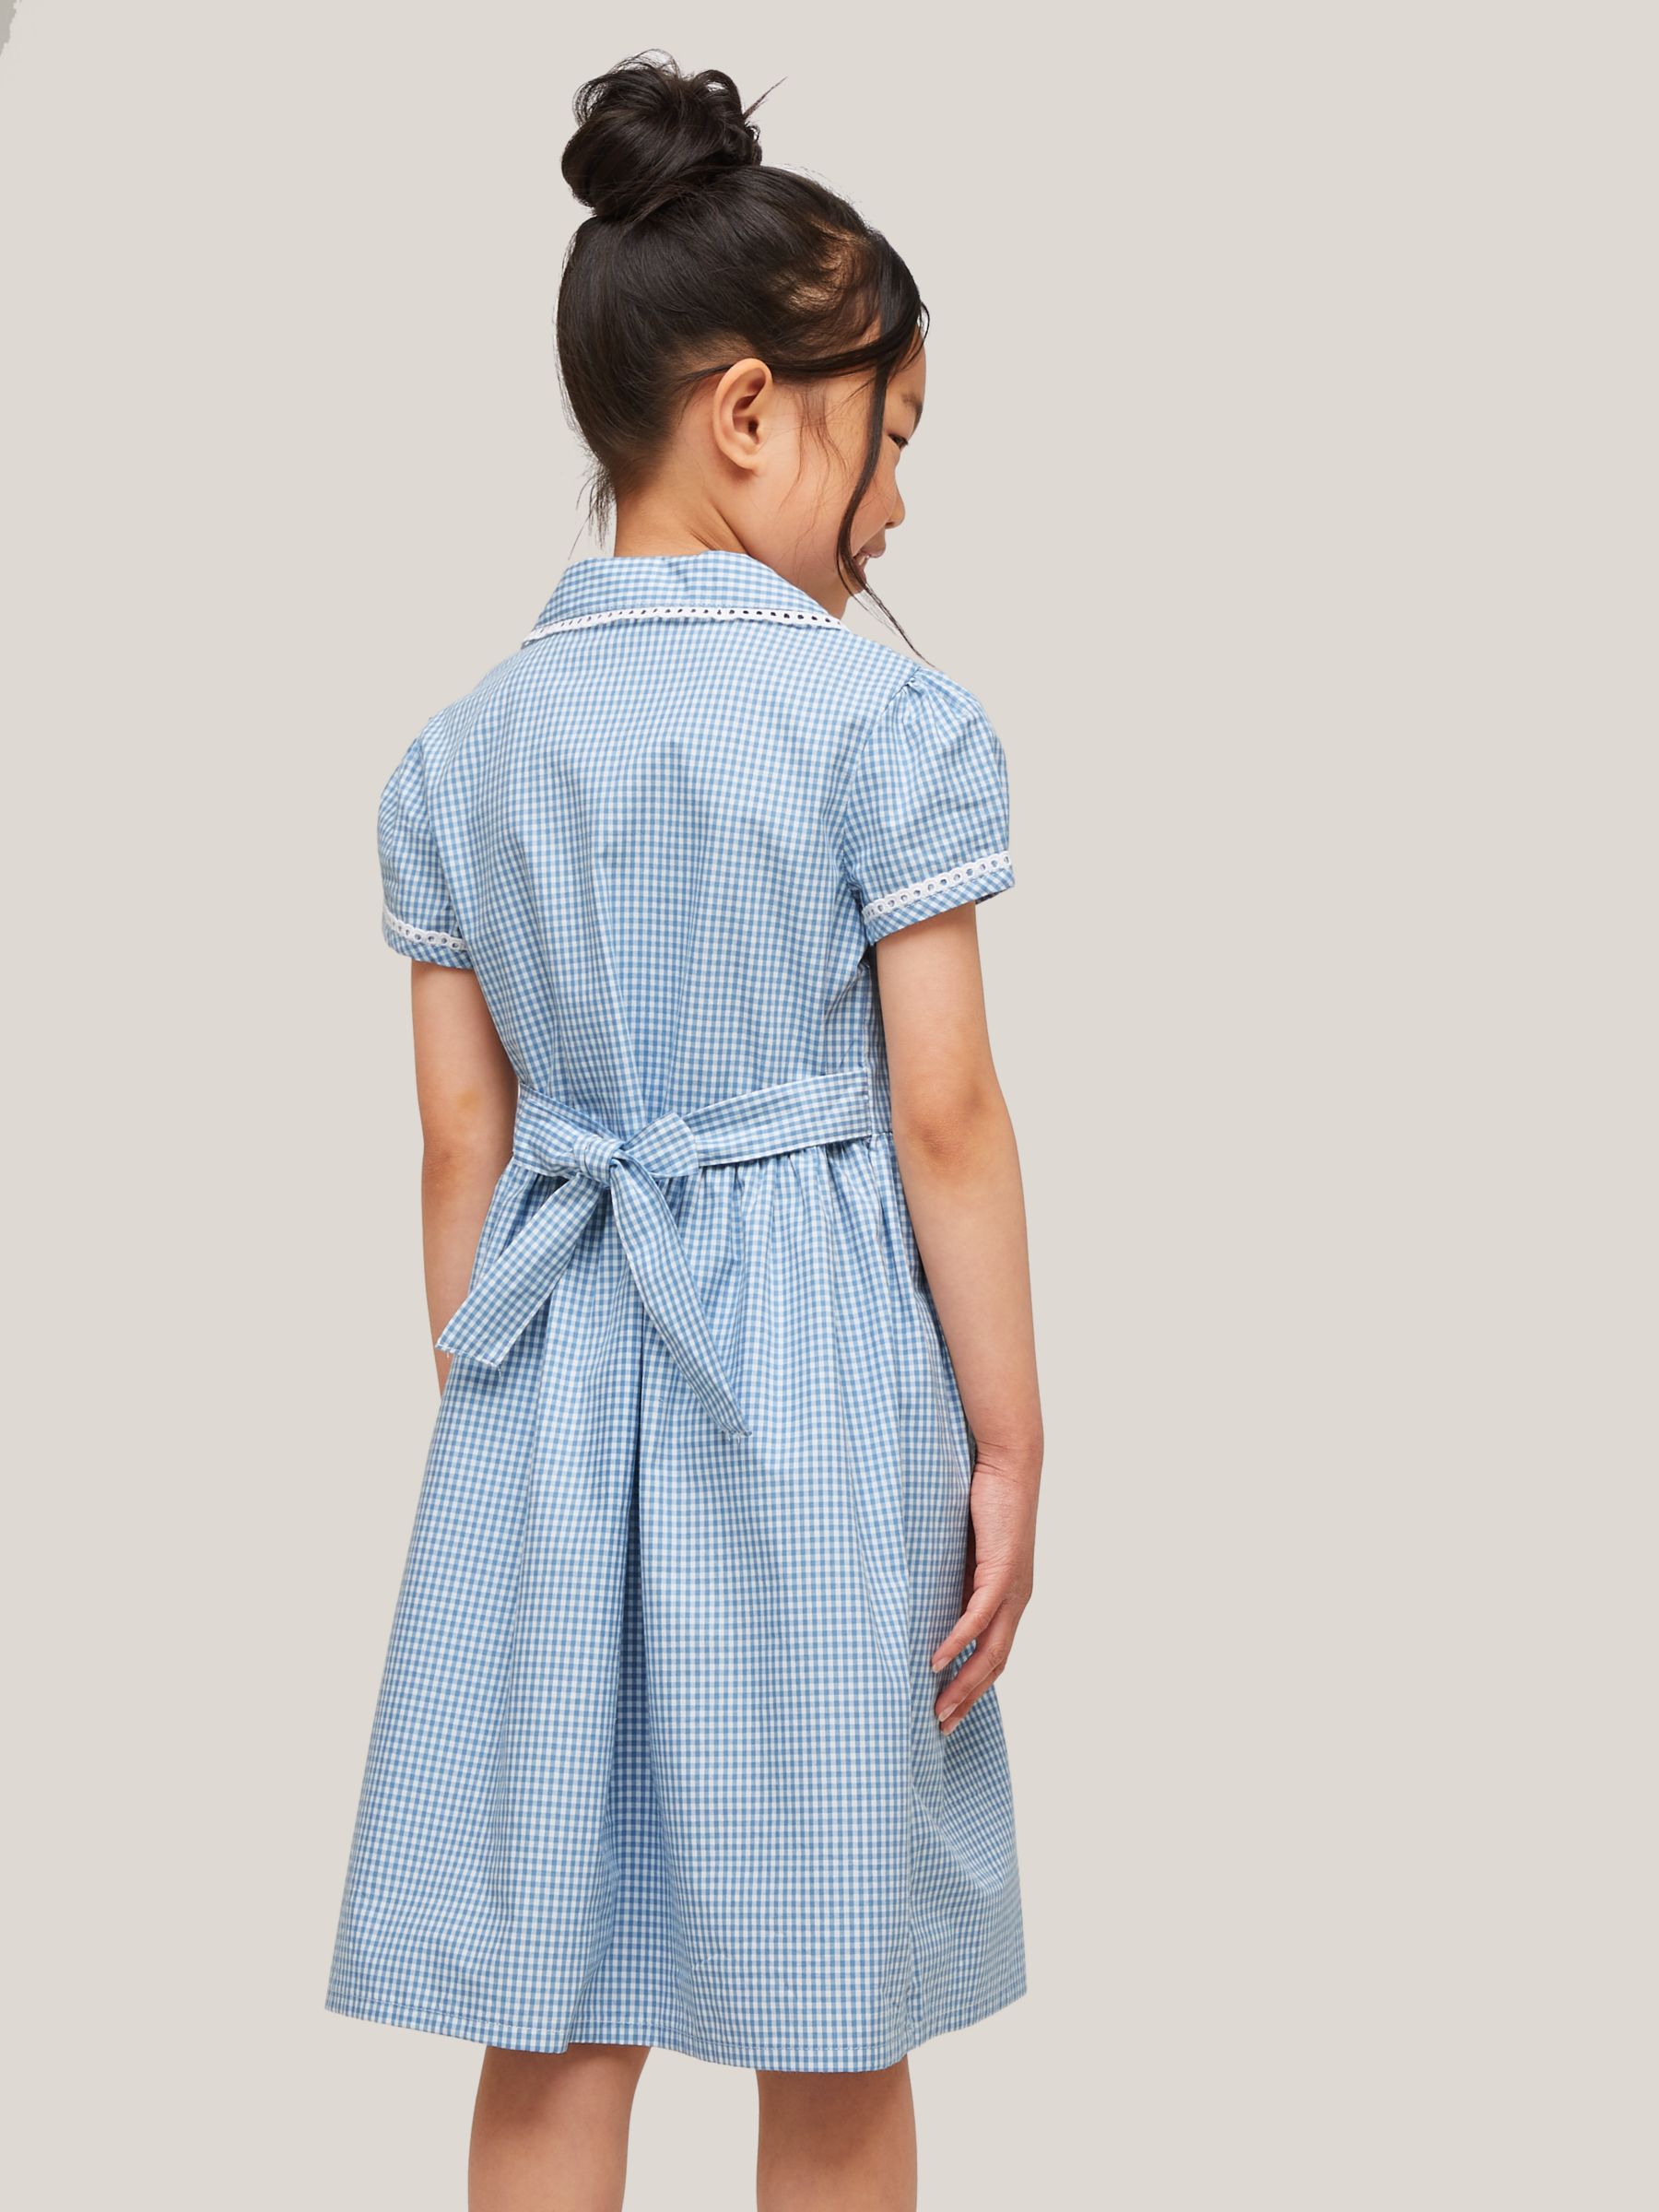 girls blue gingham school dress